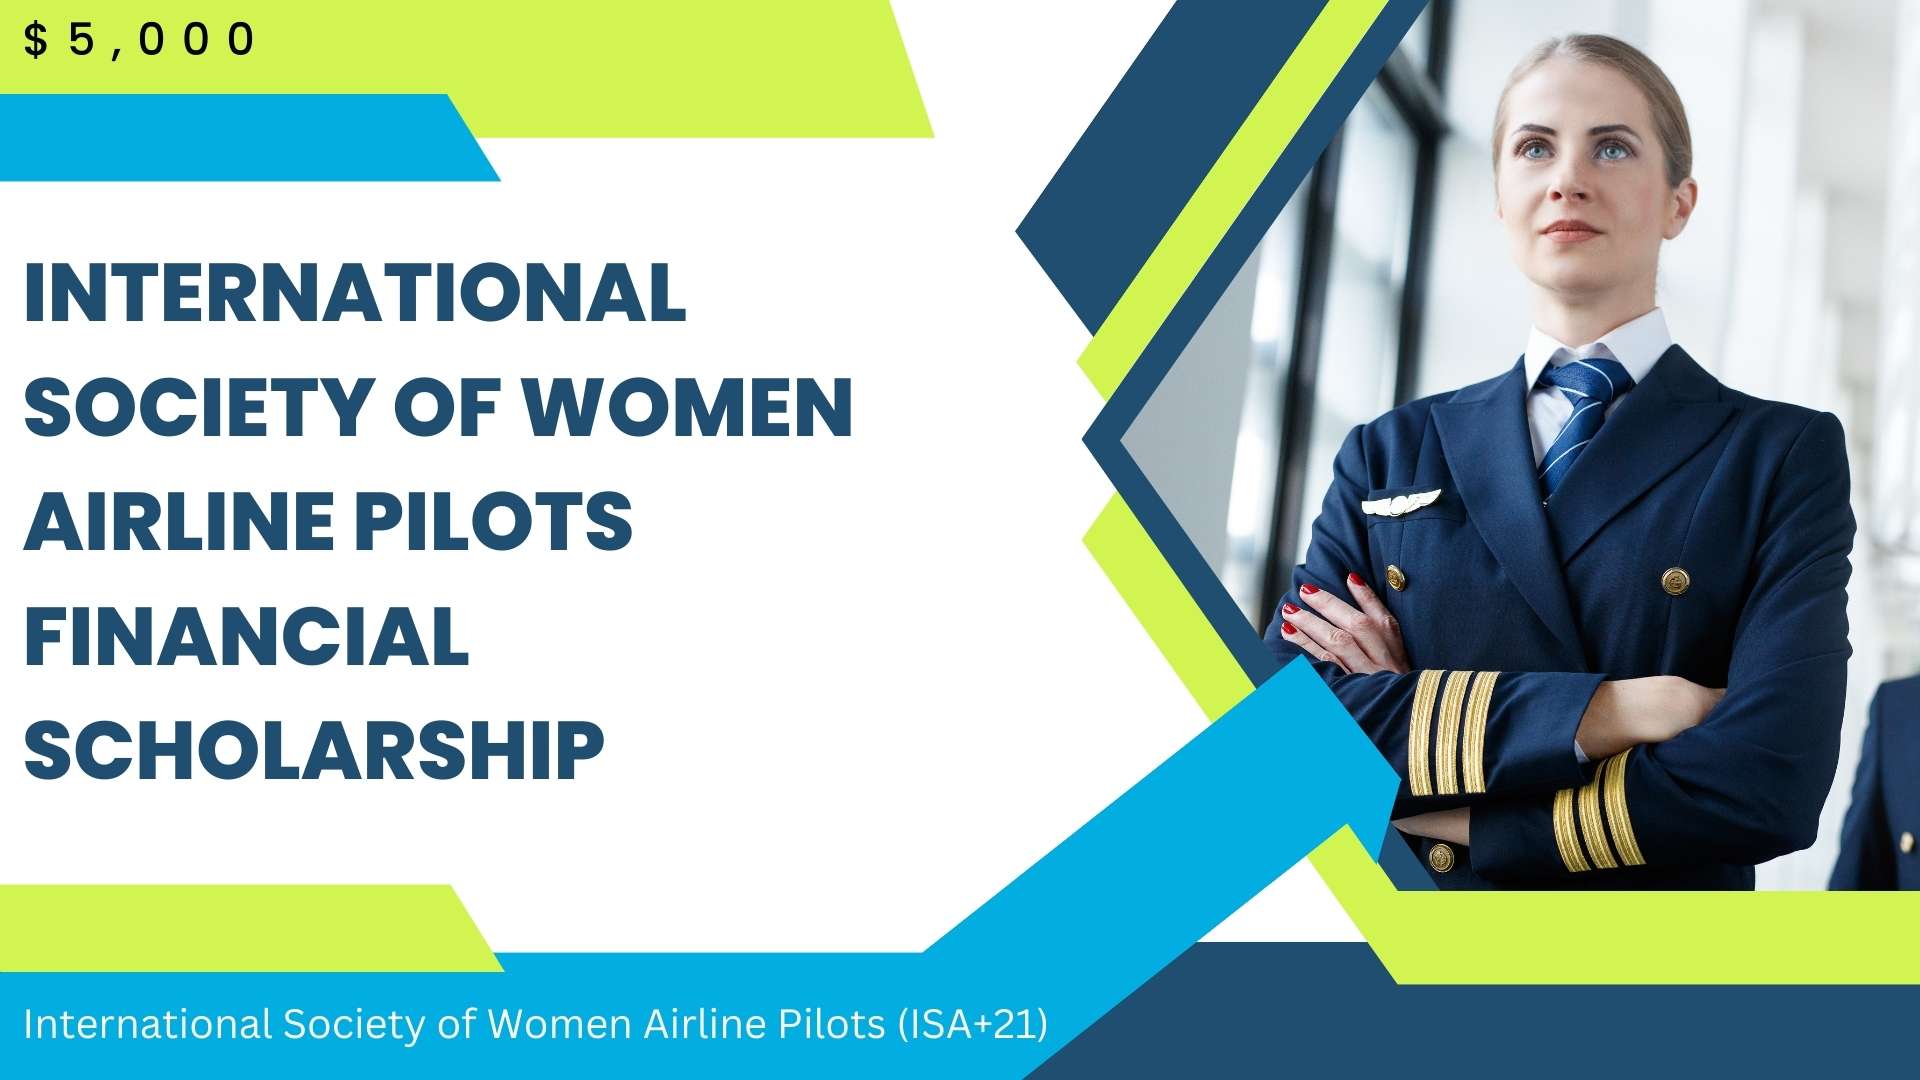 International Society of Women Airline Pilots Financial Scholarship